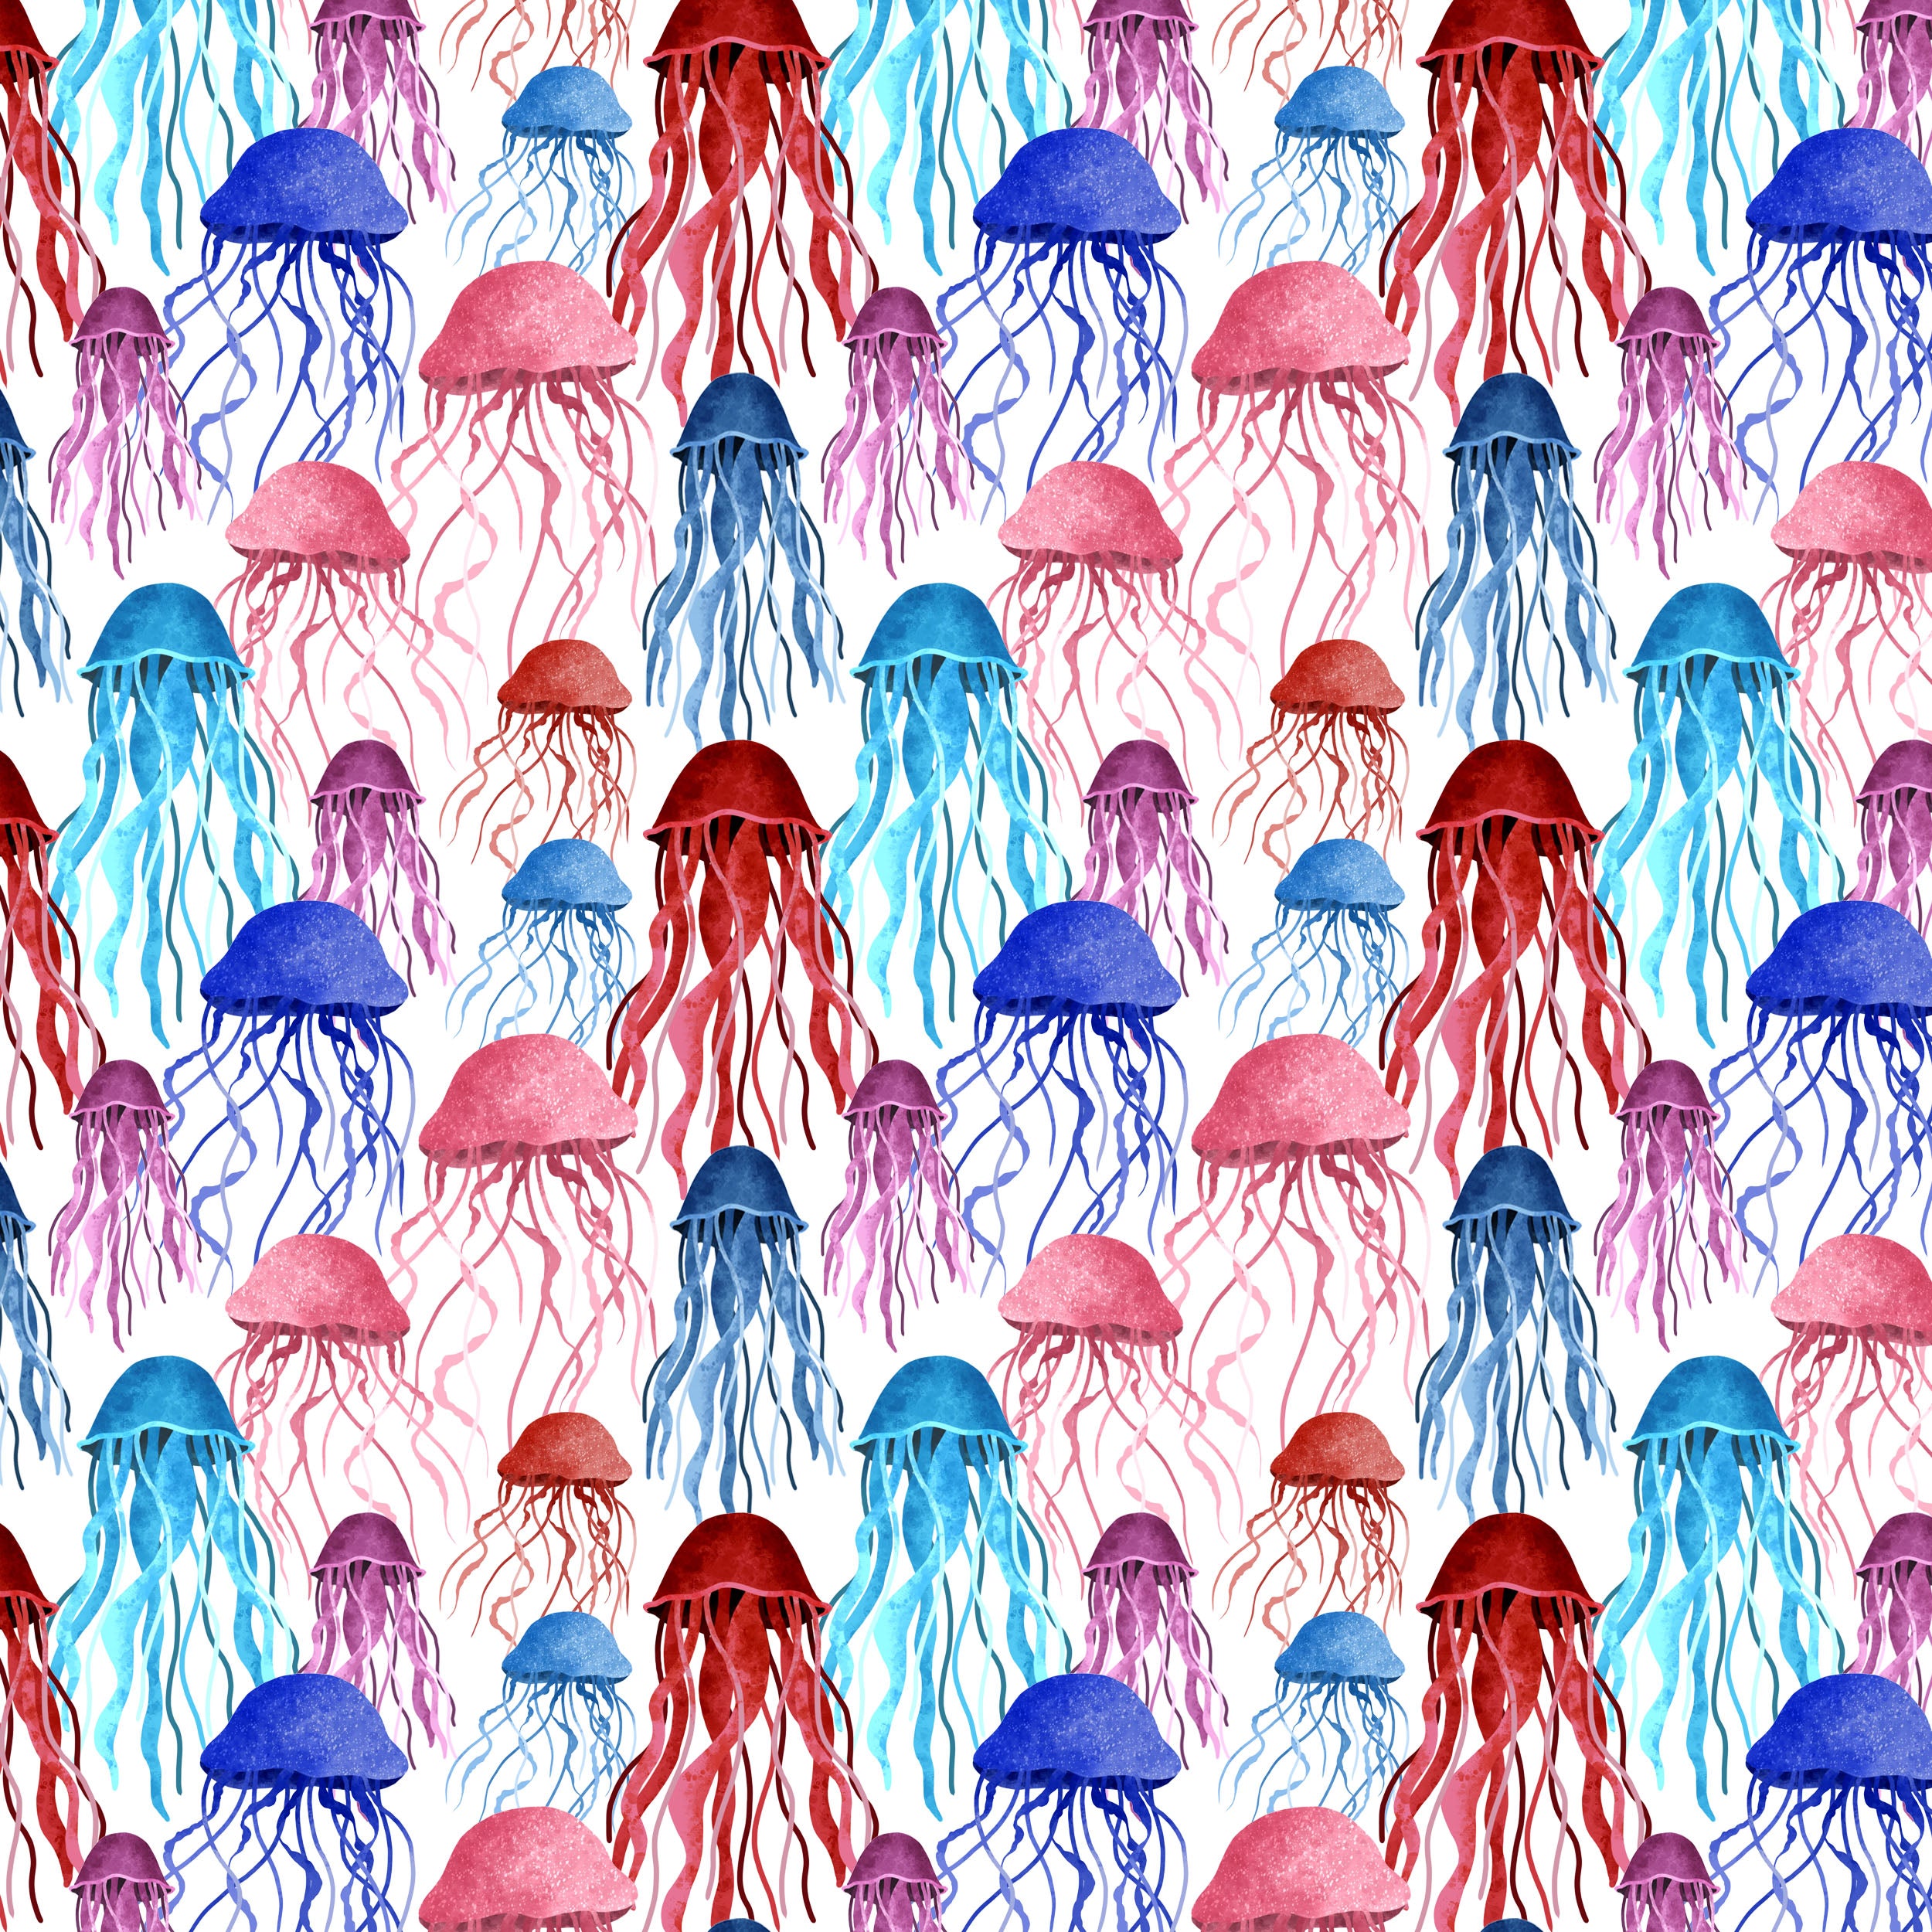 jellyfish surface pattern design